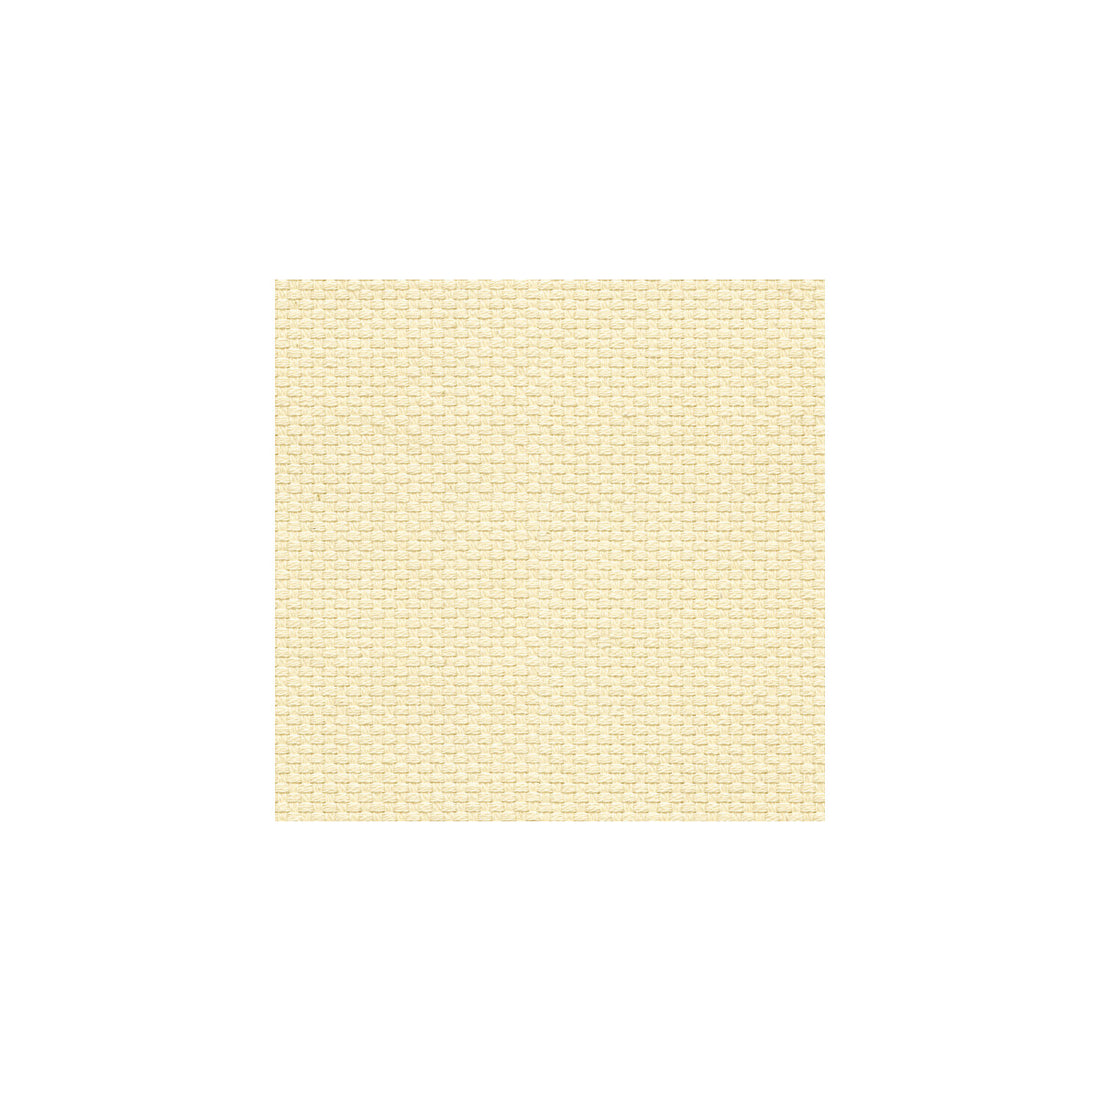 Kravet Smart fabric in 32971-1 color - pattern 32971.1.0 - by Kravet Smart